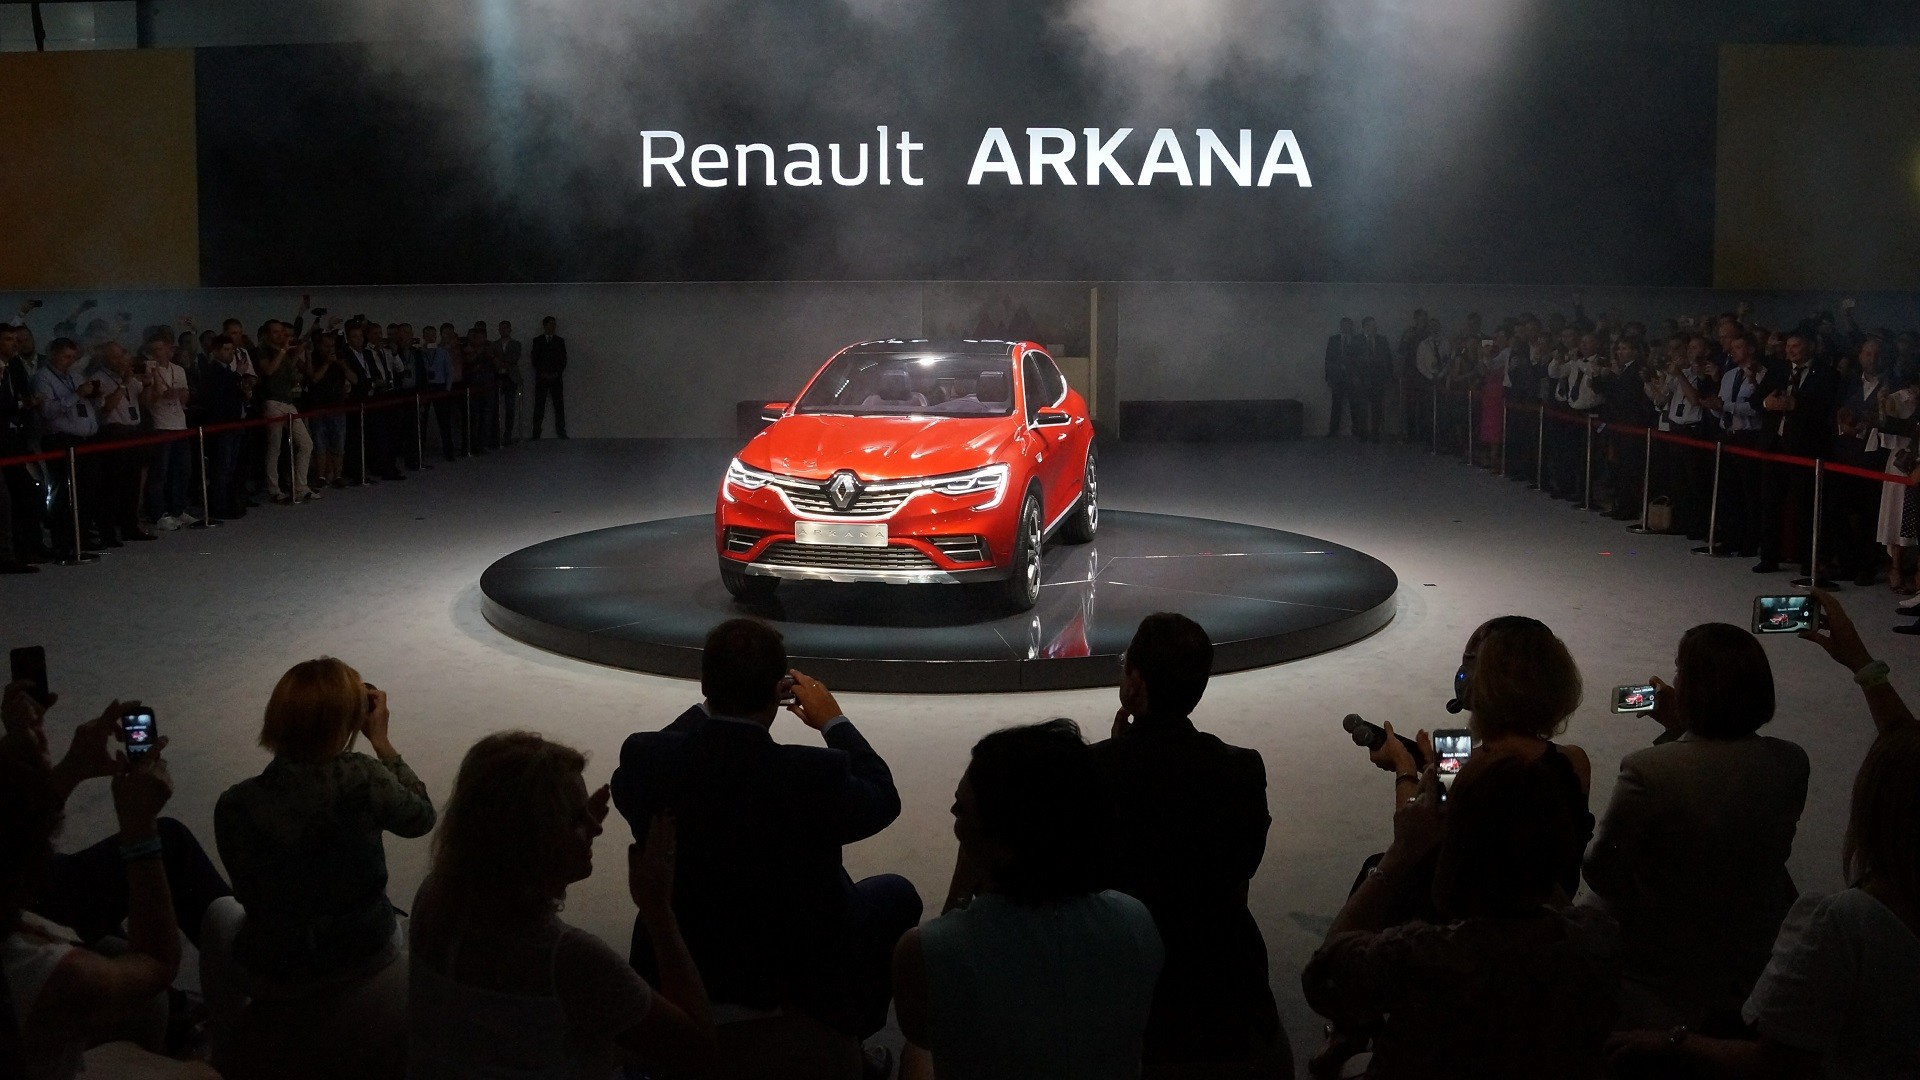 Le Renault Arkana exposé au Salon automobile international de Moscou en août 2018